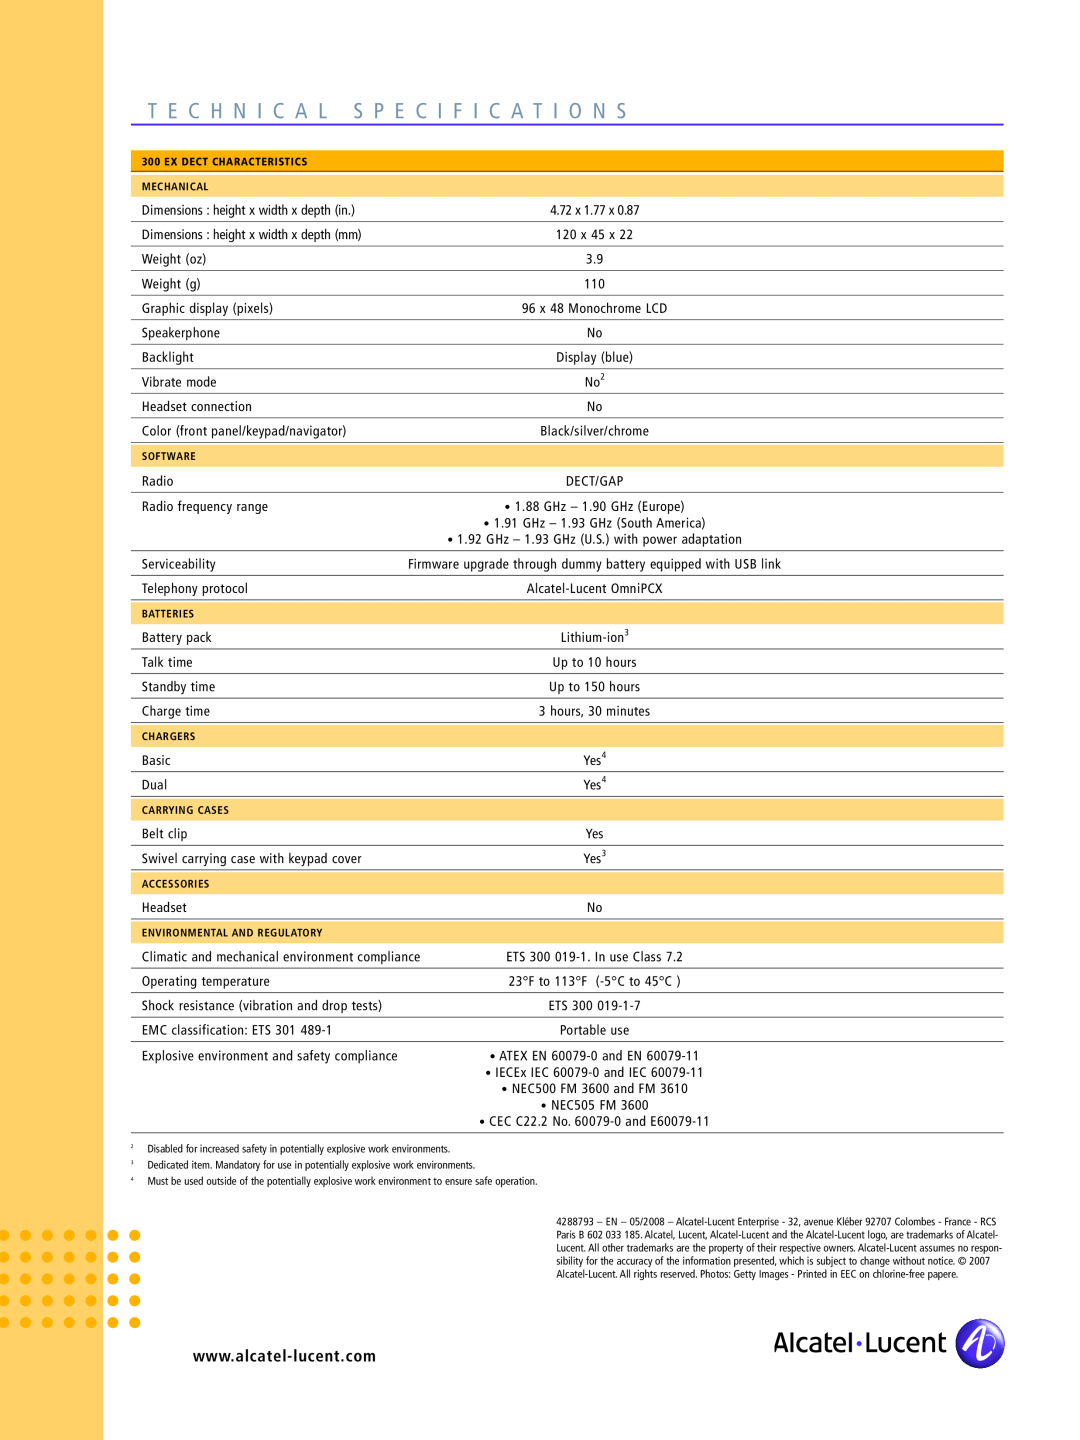 Alcatel-Lucent 300 Ex manual Te Chni, S Pecifications 